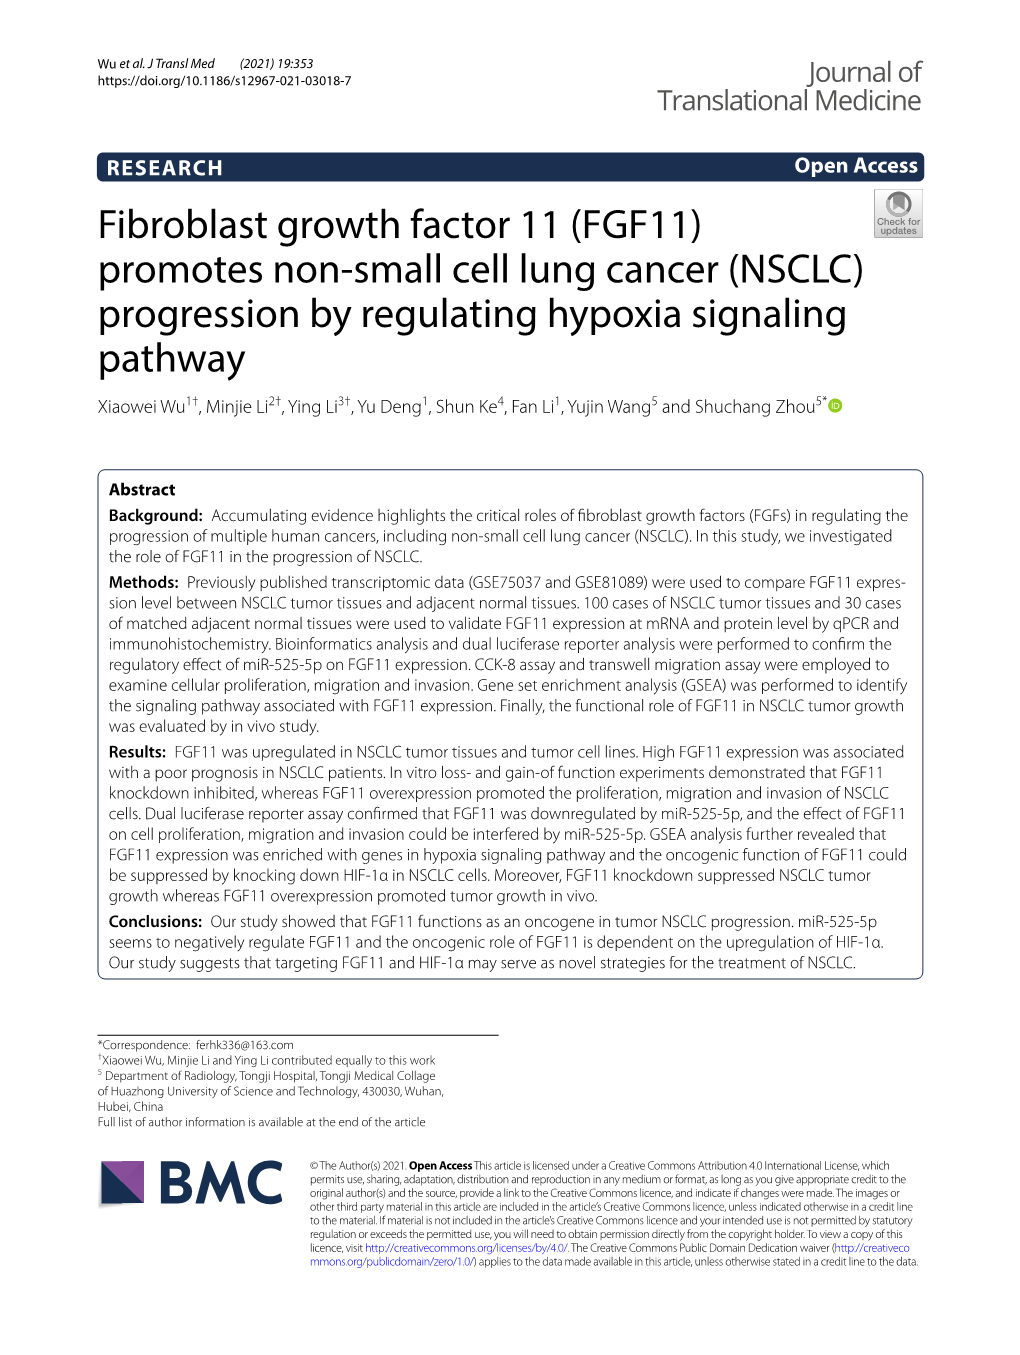 Fibroblast Growth Factor 11 (FGF11)